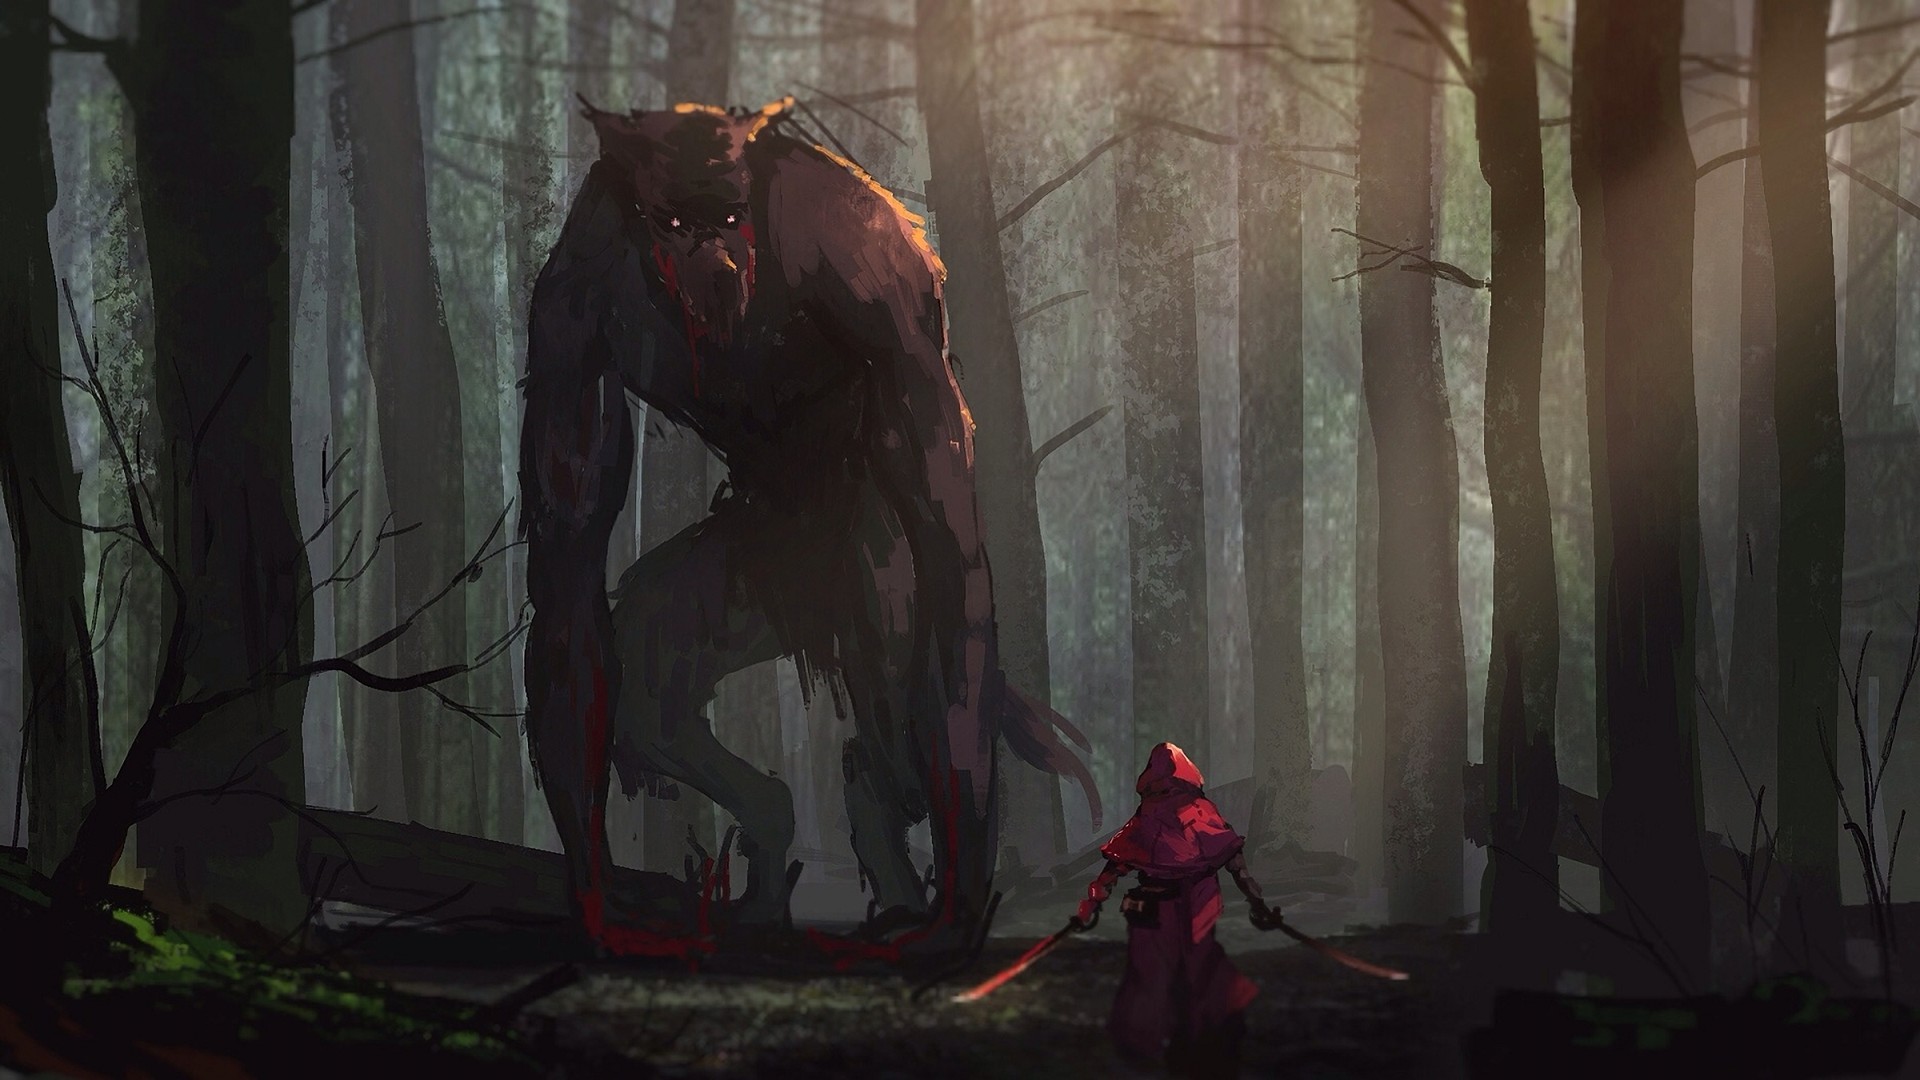 Werewolf red riding hood